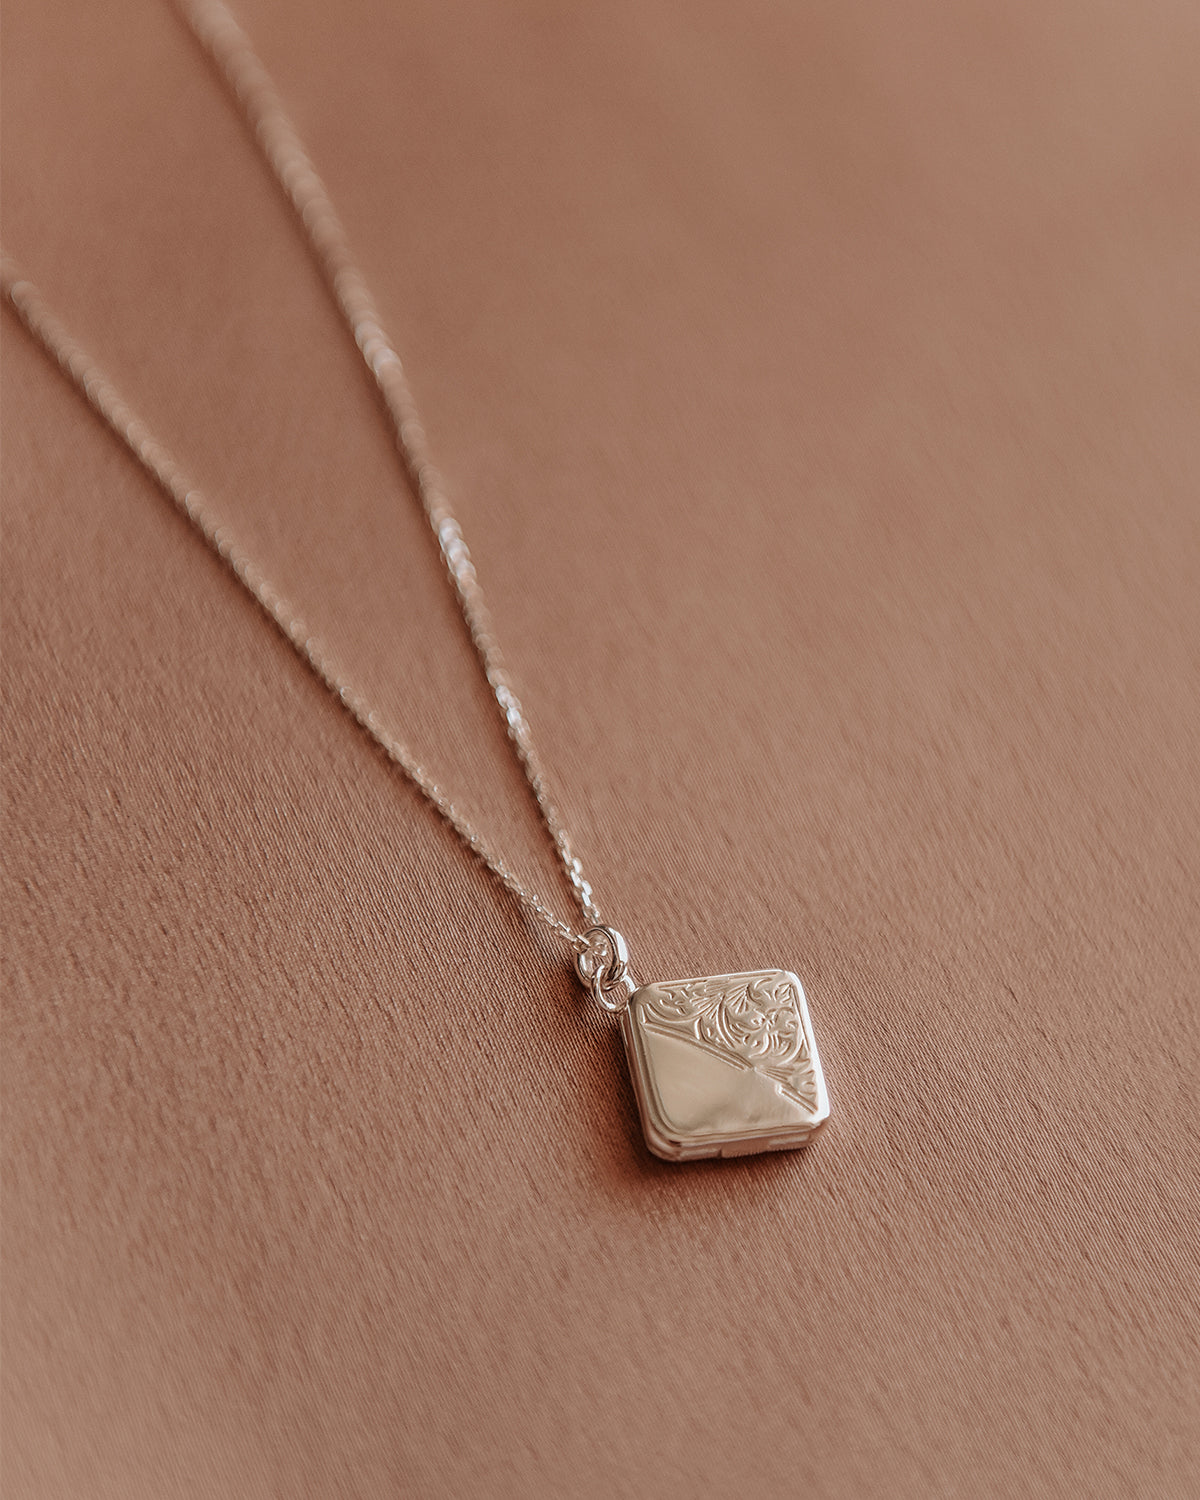 Daughter Diamond Gold-Plated Letter Pendant Necklace Locket: 'Dear Daughter  Letter Of Love' Diamond Locket